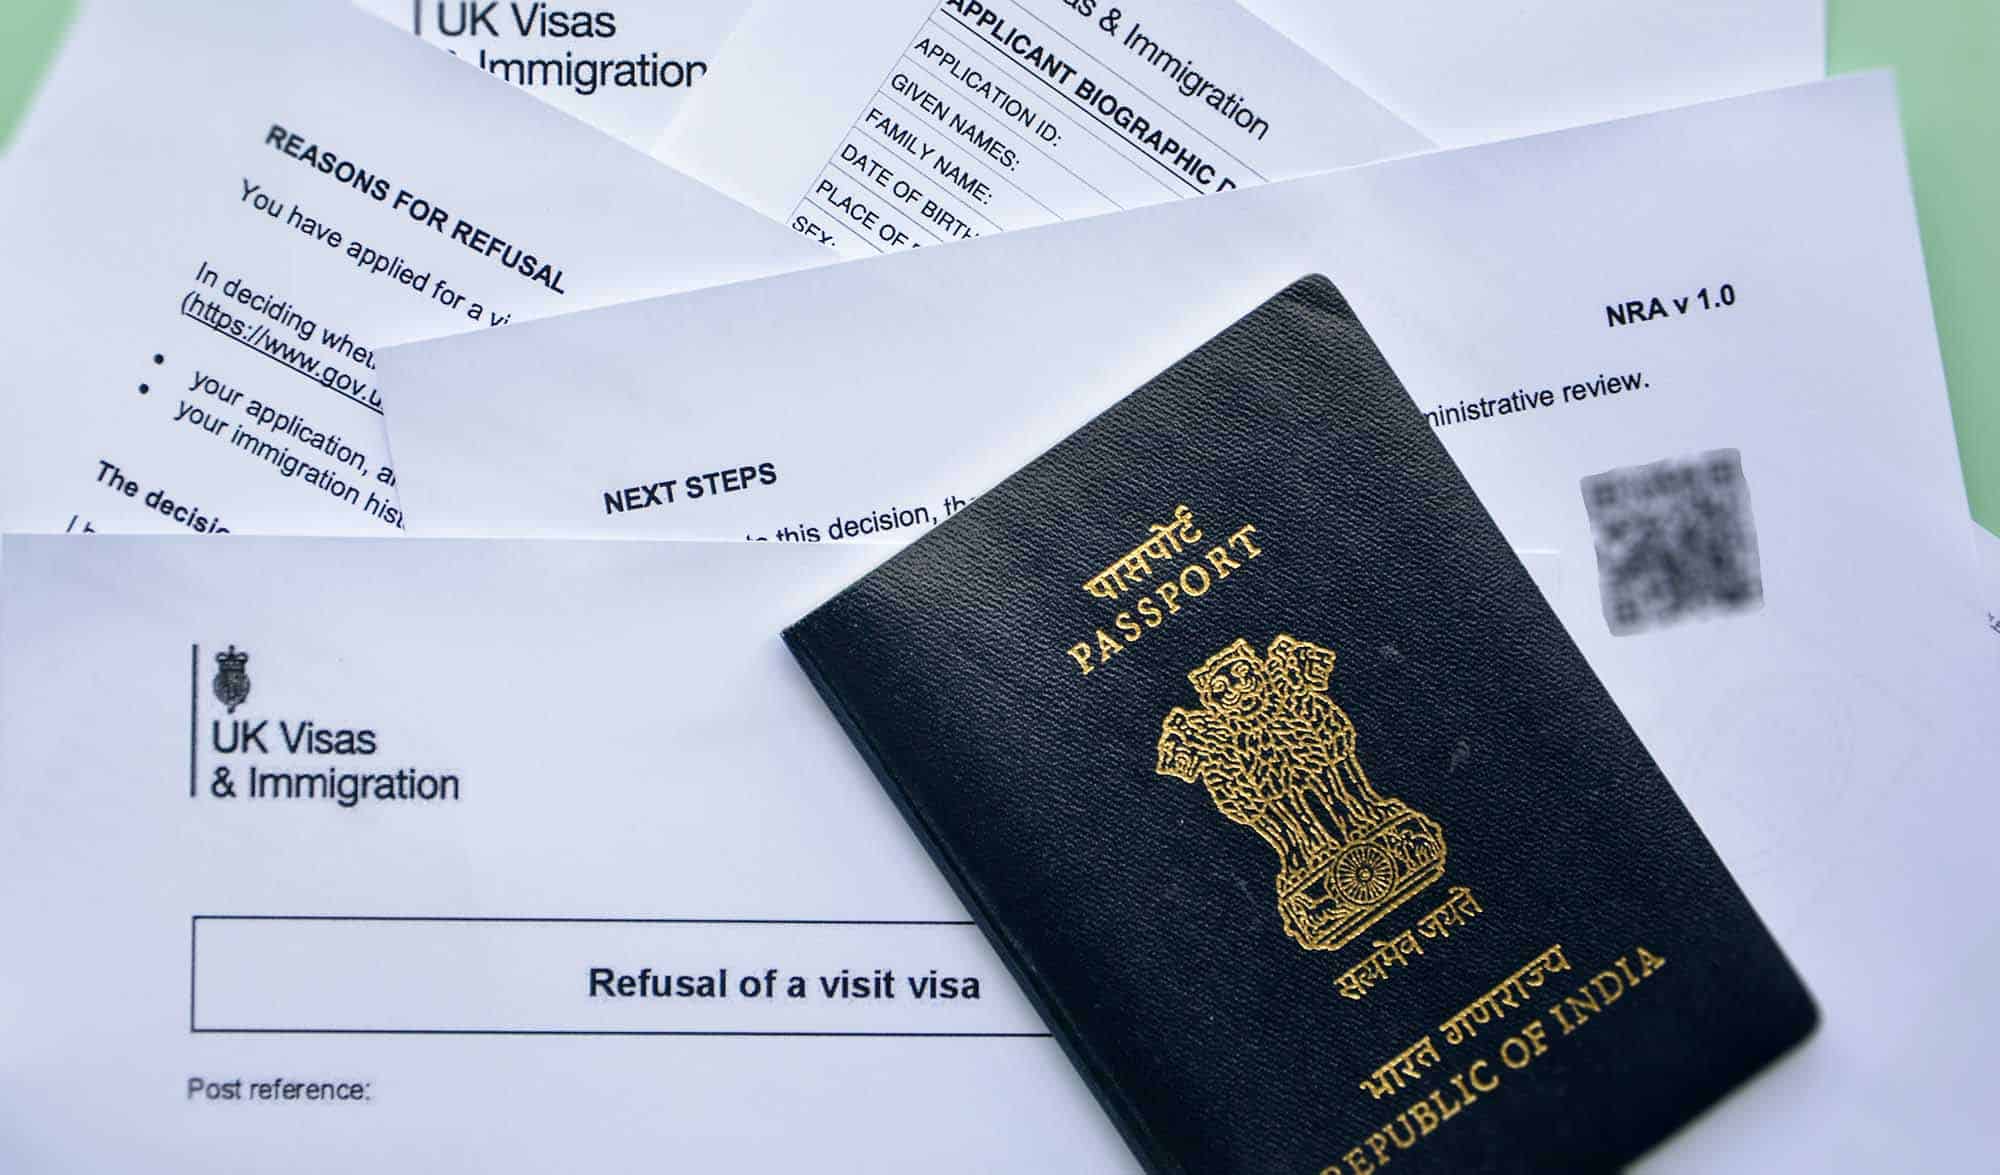 Check if you need a UK visa 